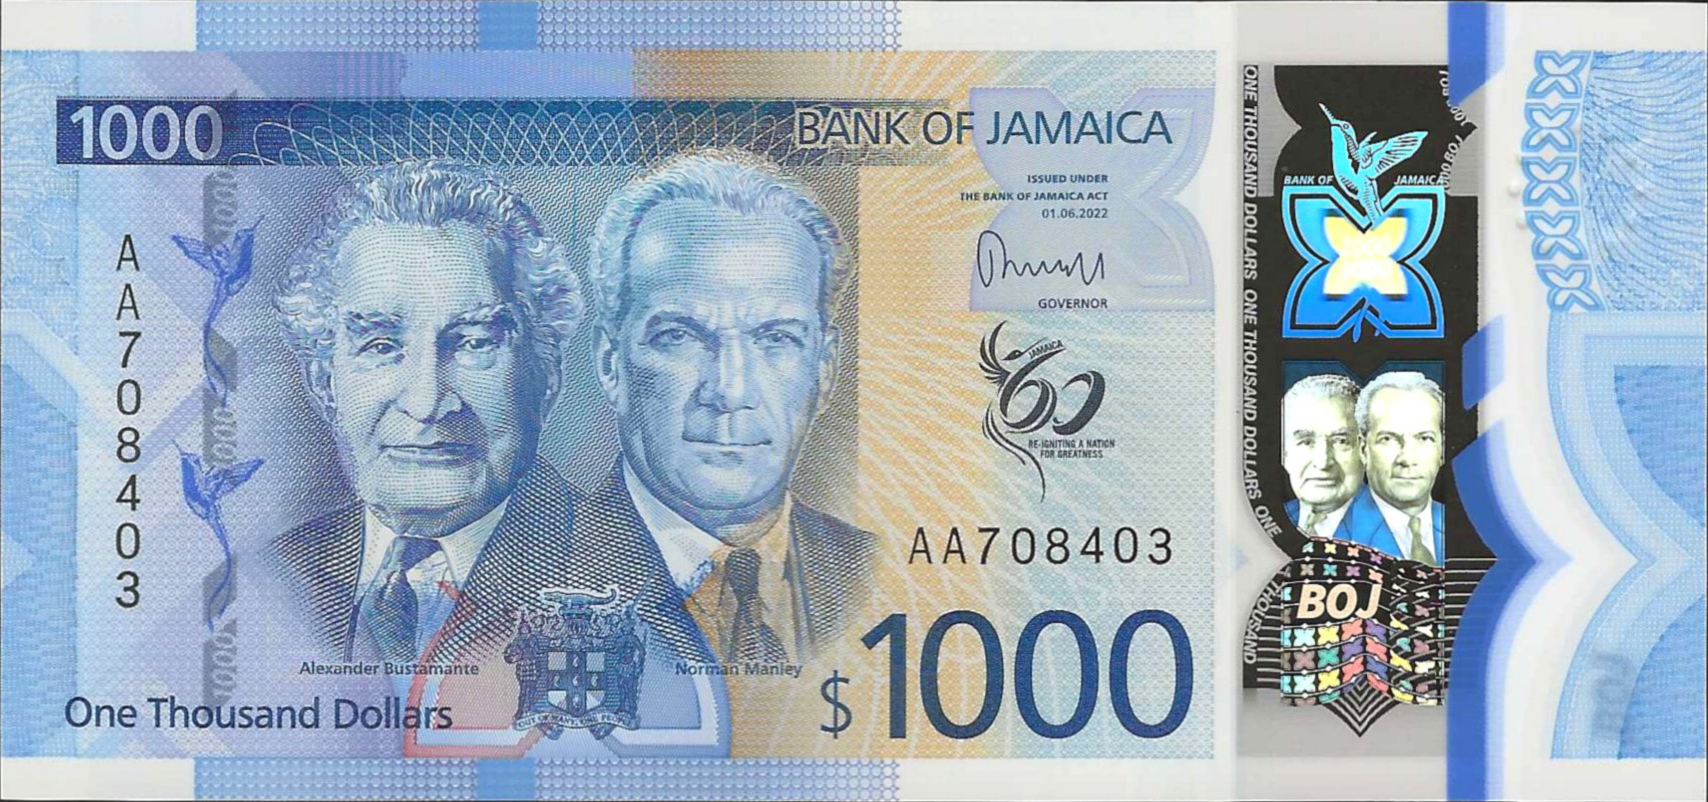 Jamaica new polymer 1,000dollar note (B254a) confirmed BanknoteNews